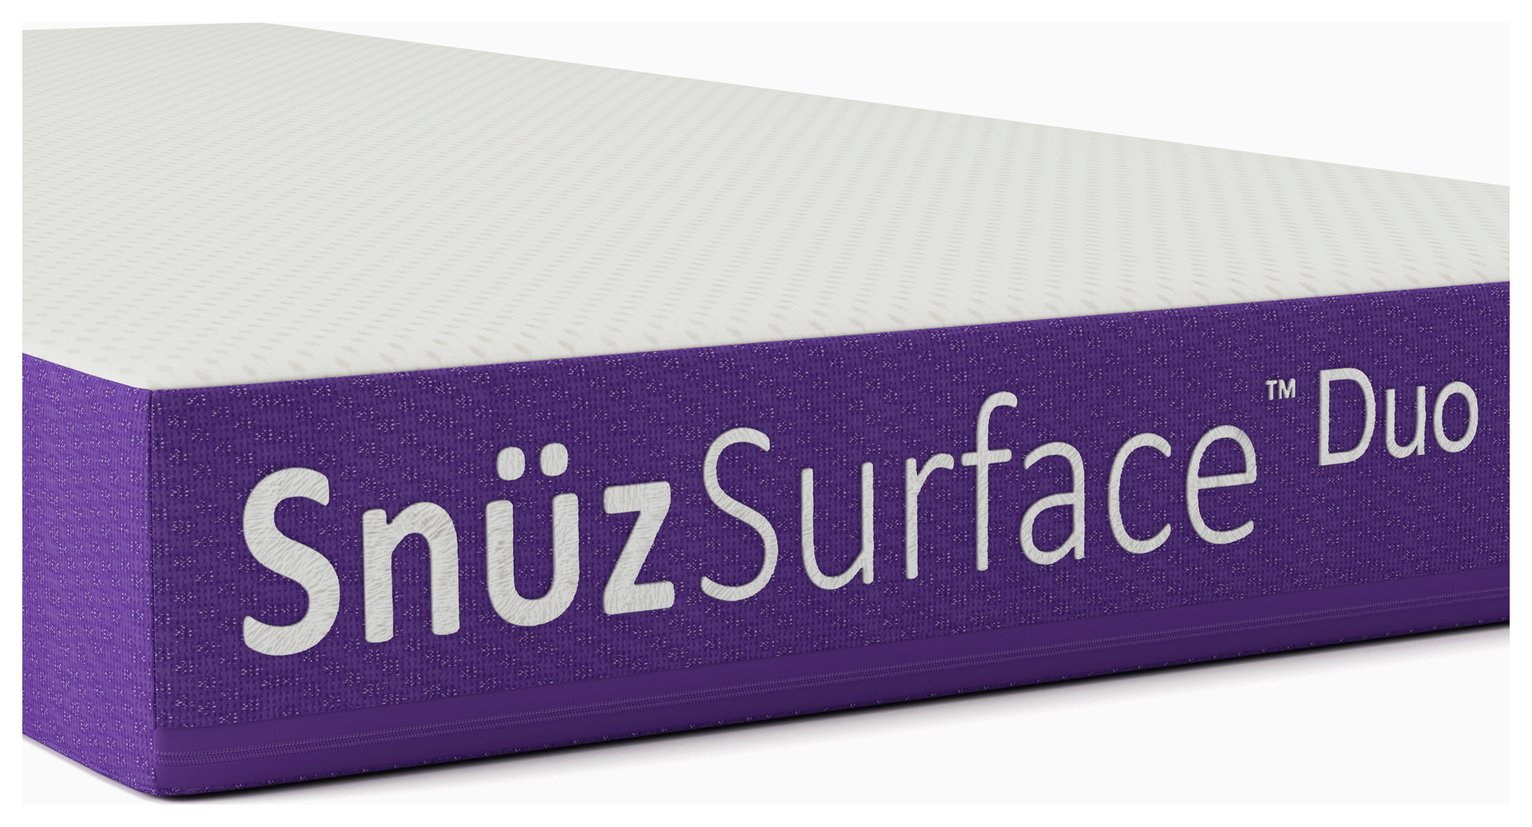 Snuz Surface Duo 70 x 140cm Cot Bed Mattress